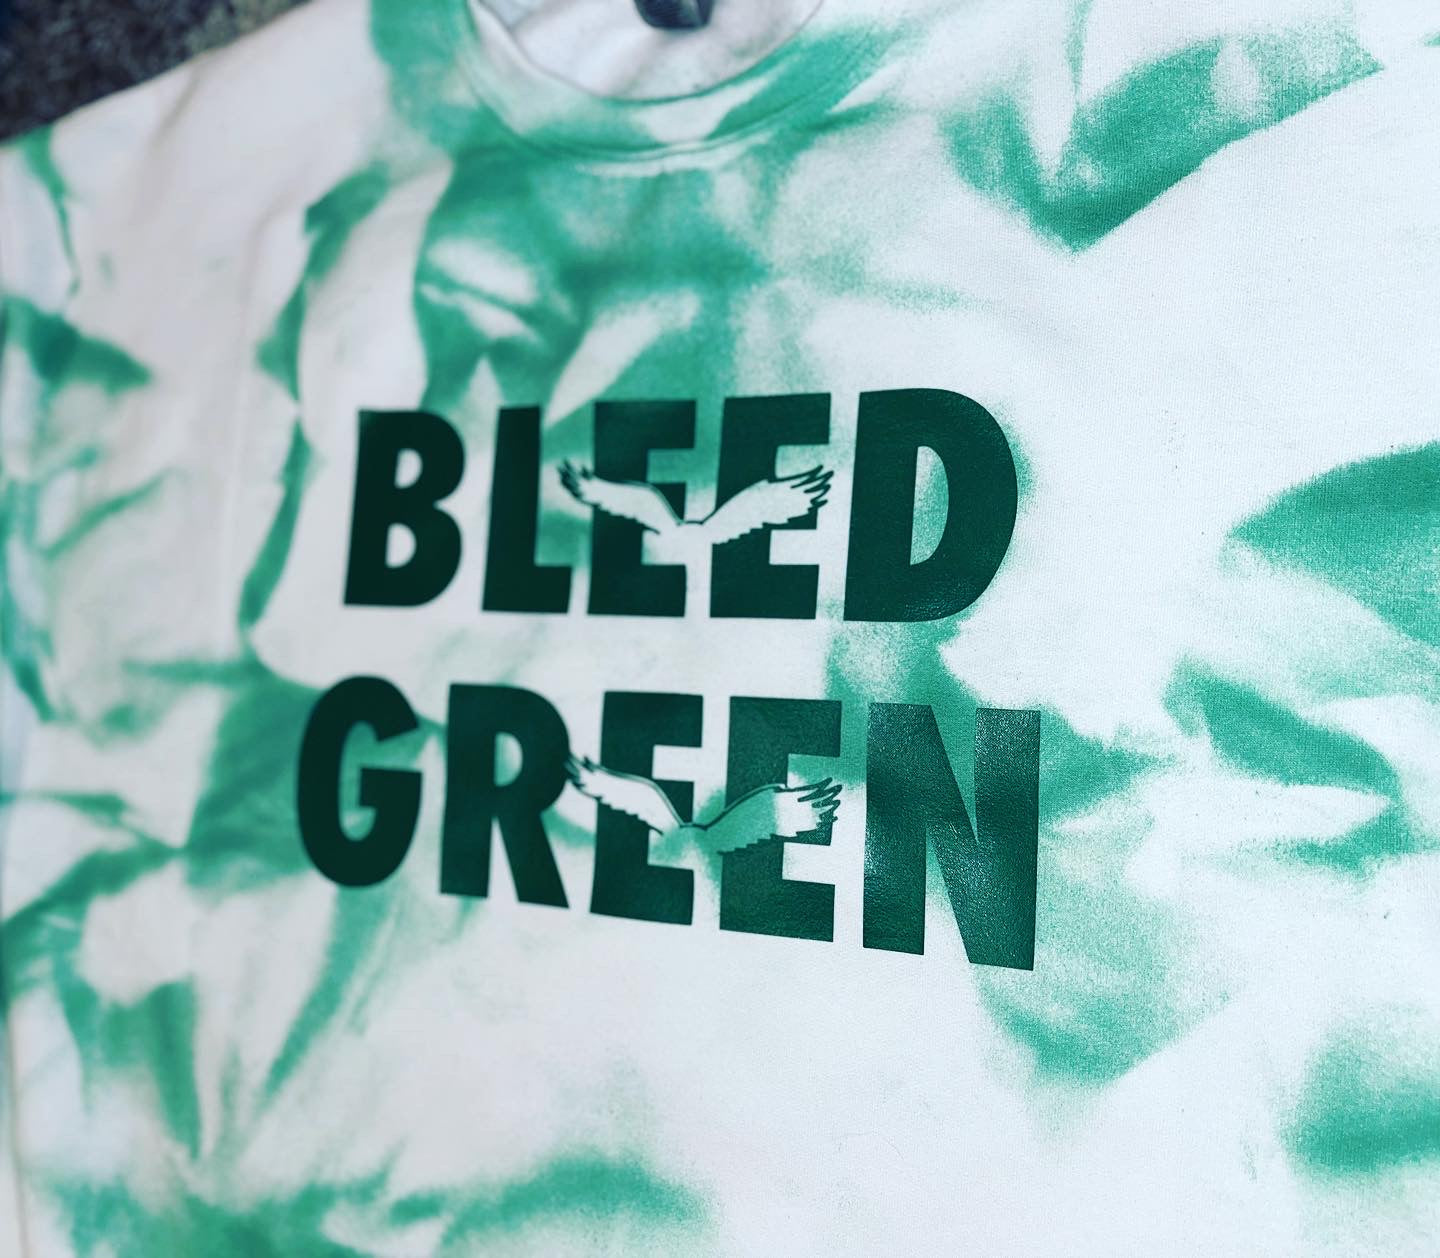 Bleed Green spray crew